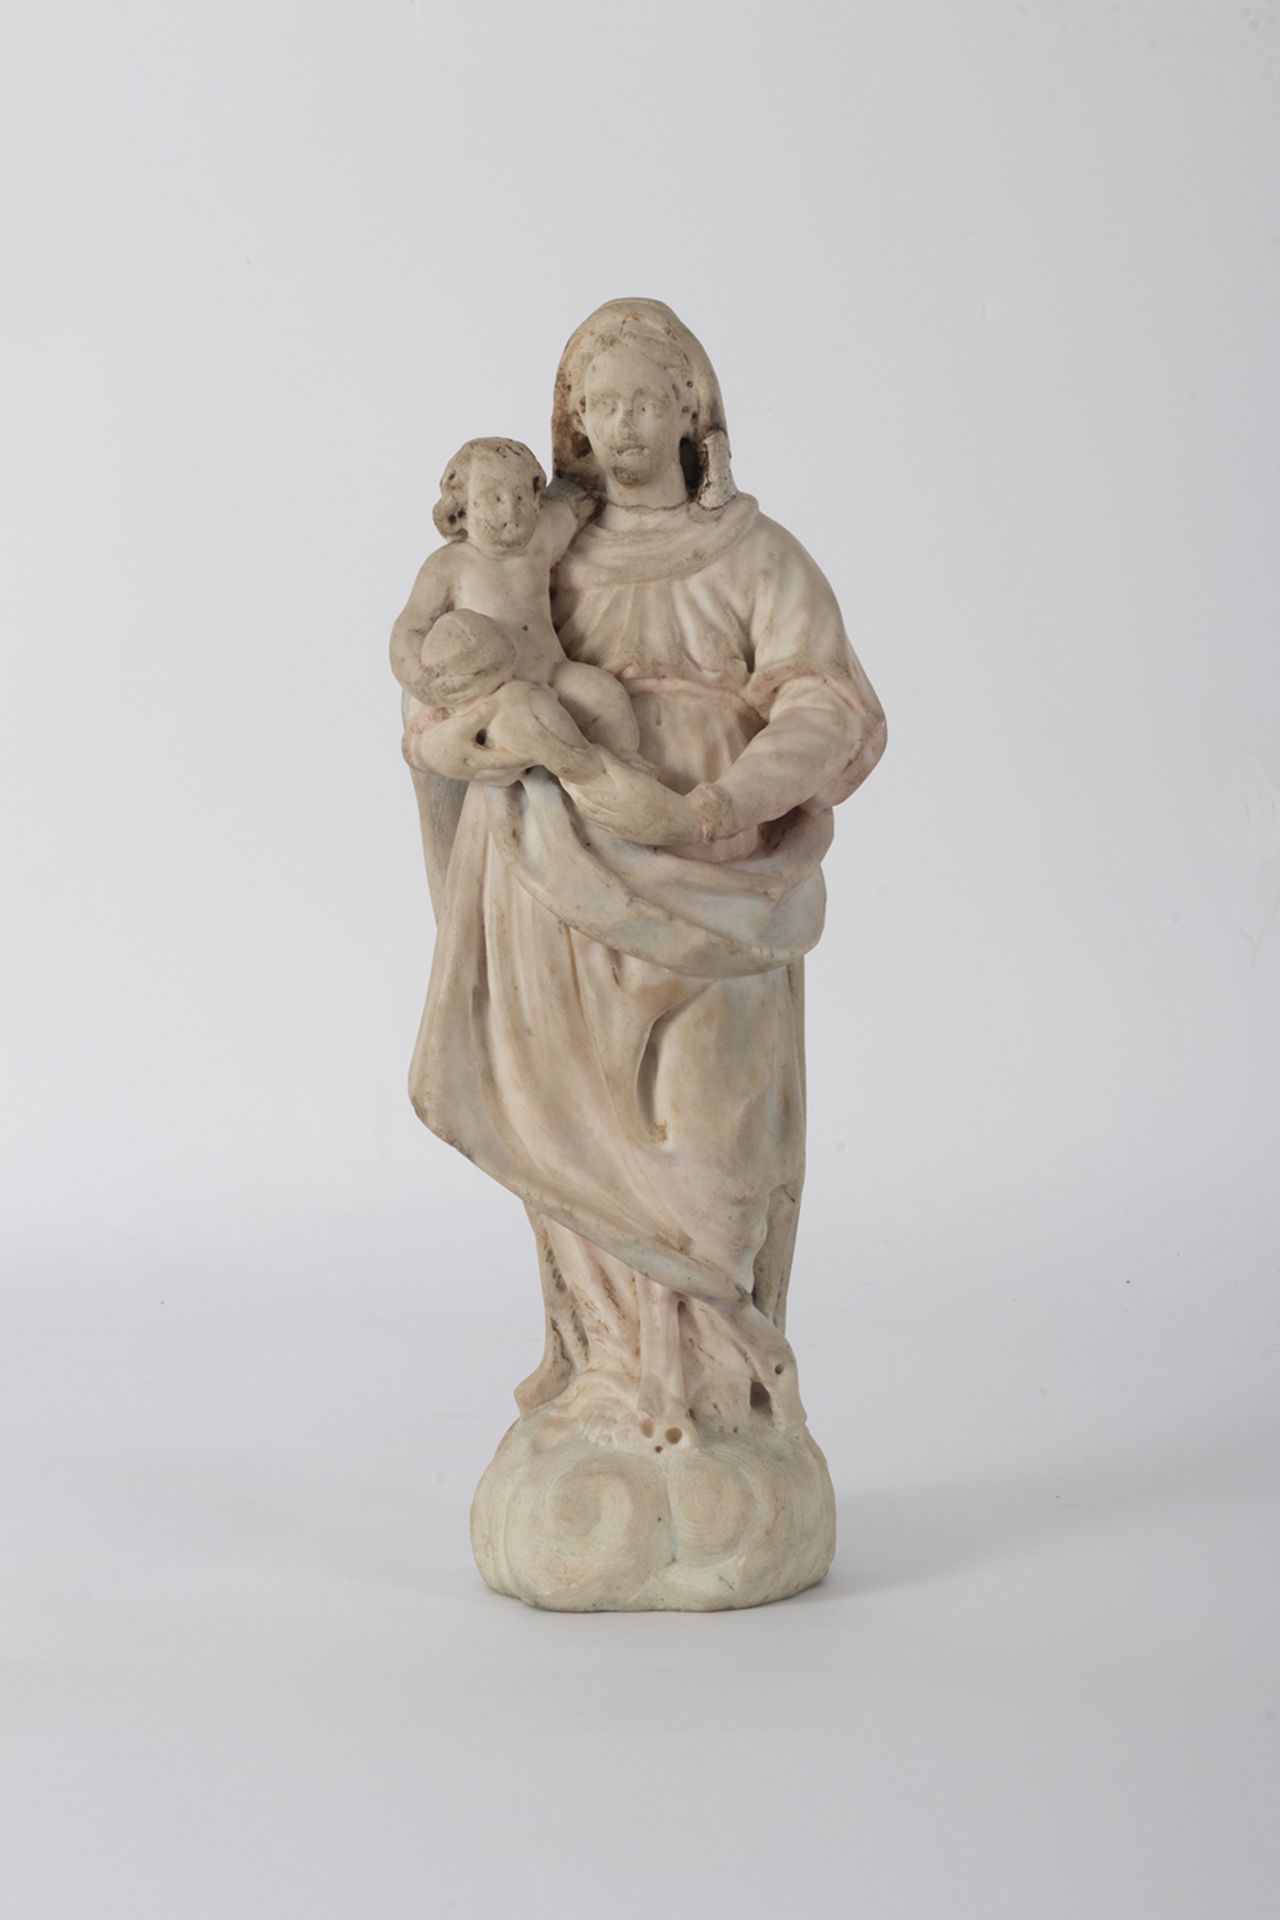 Spanish school of the 18th century. Virgin with Child.